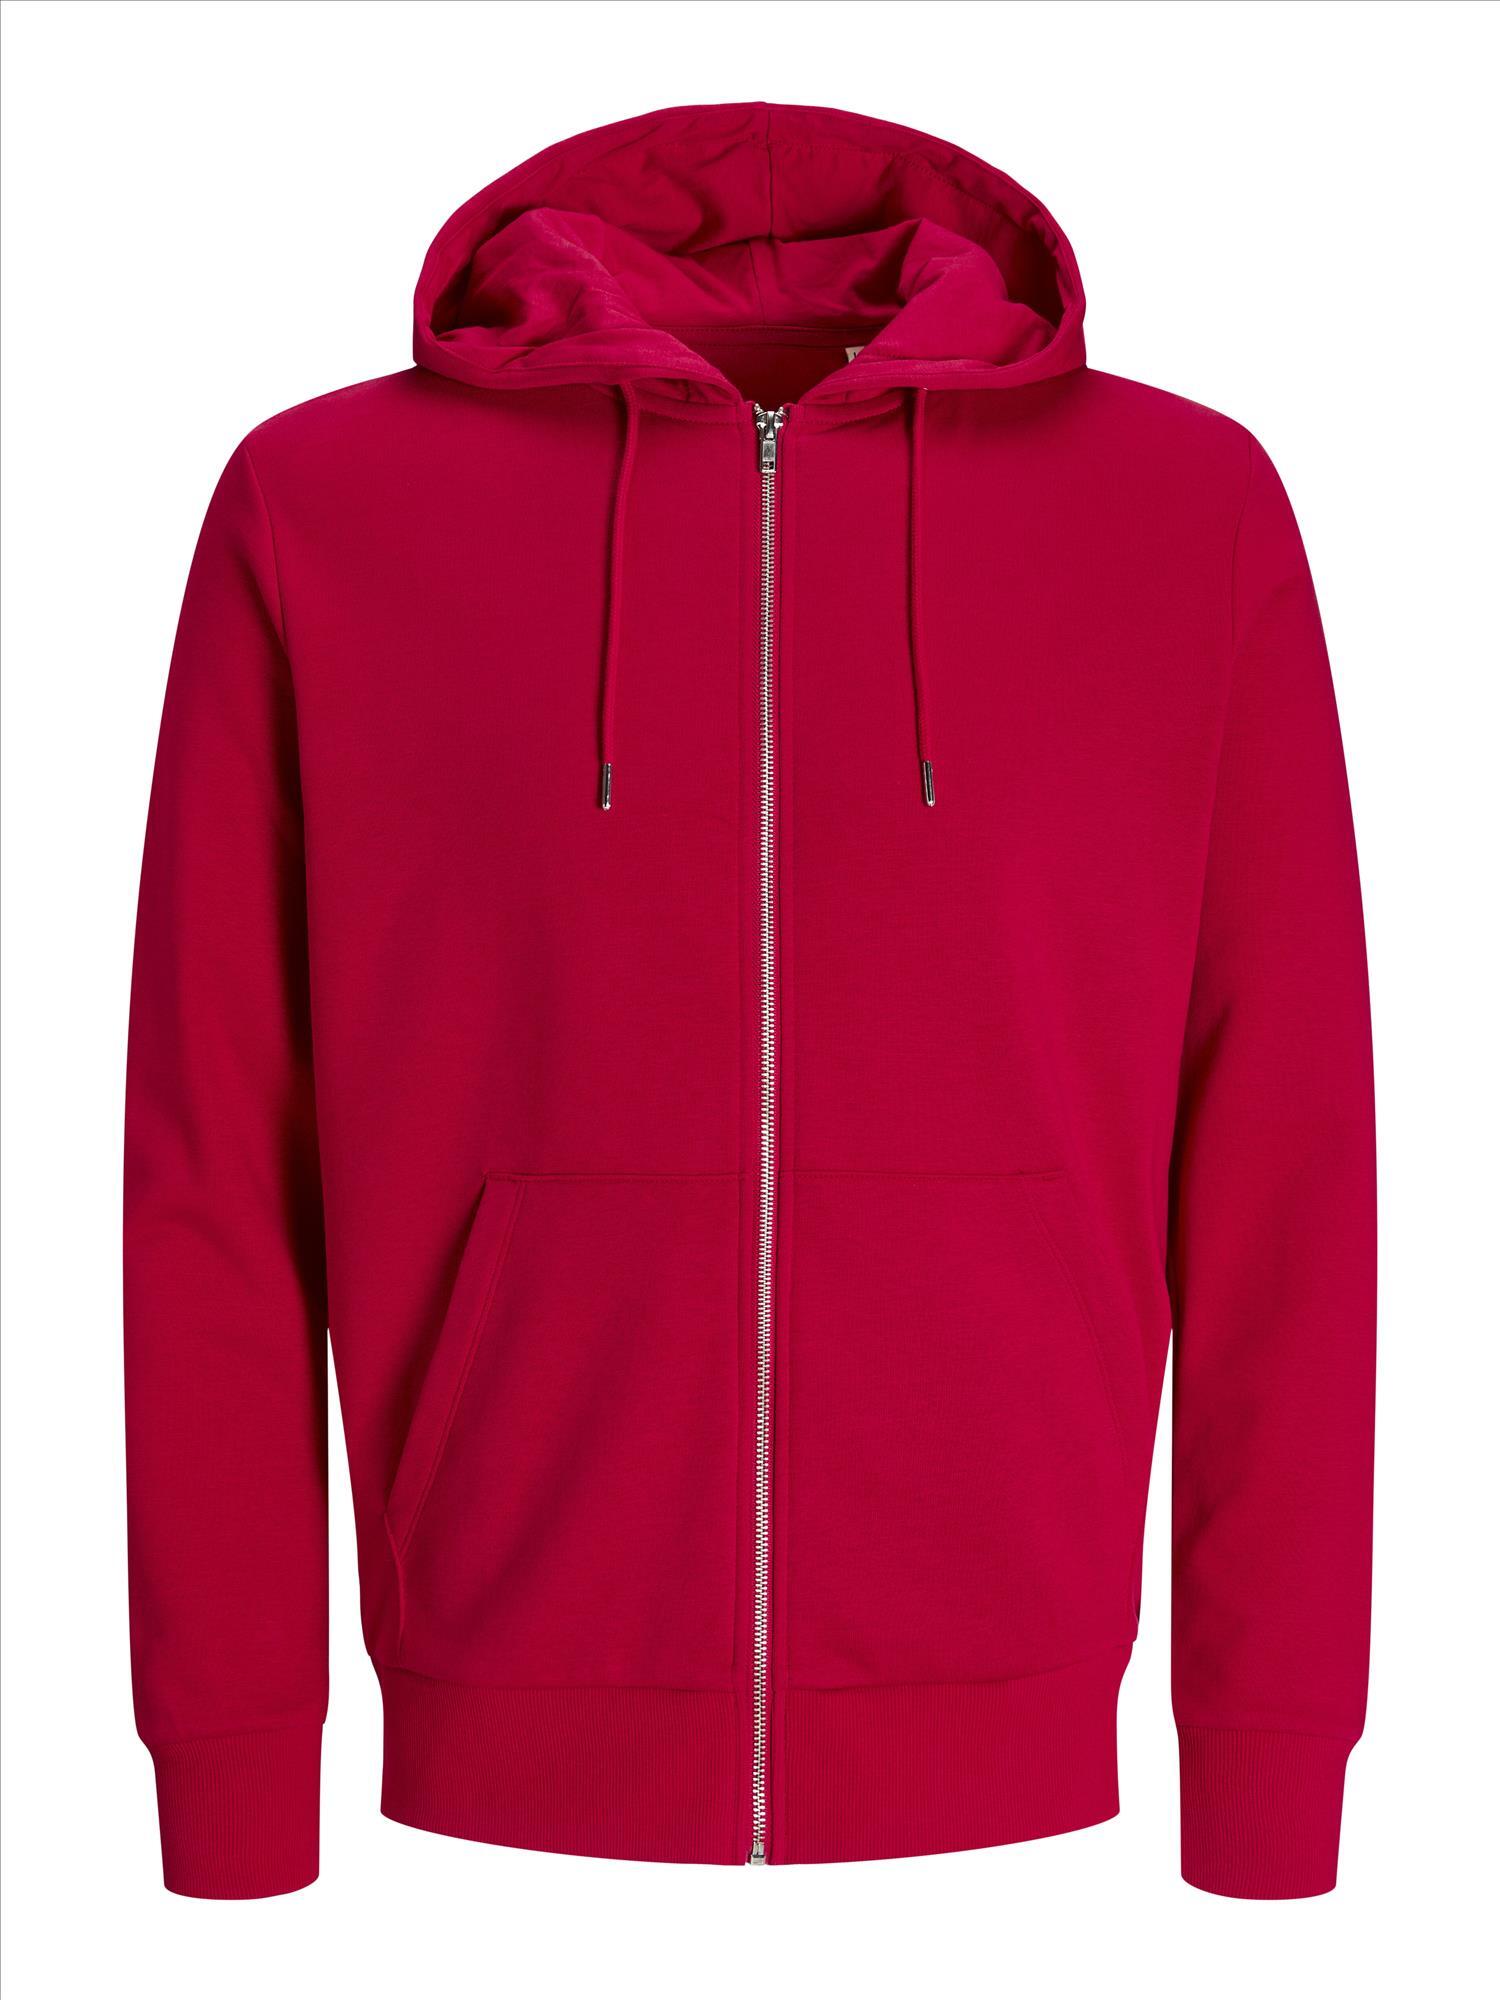 Jack & Jones Hoodie lipstick red unisex hoodies te personaliseren bedrukbaar